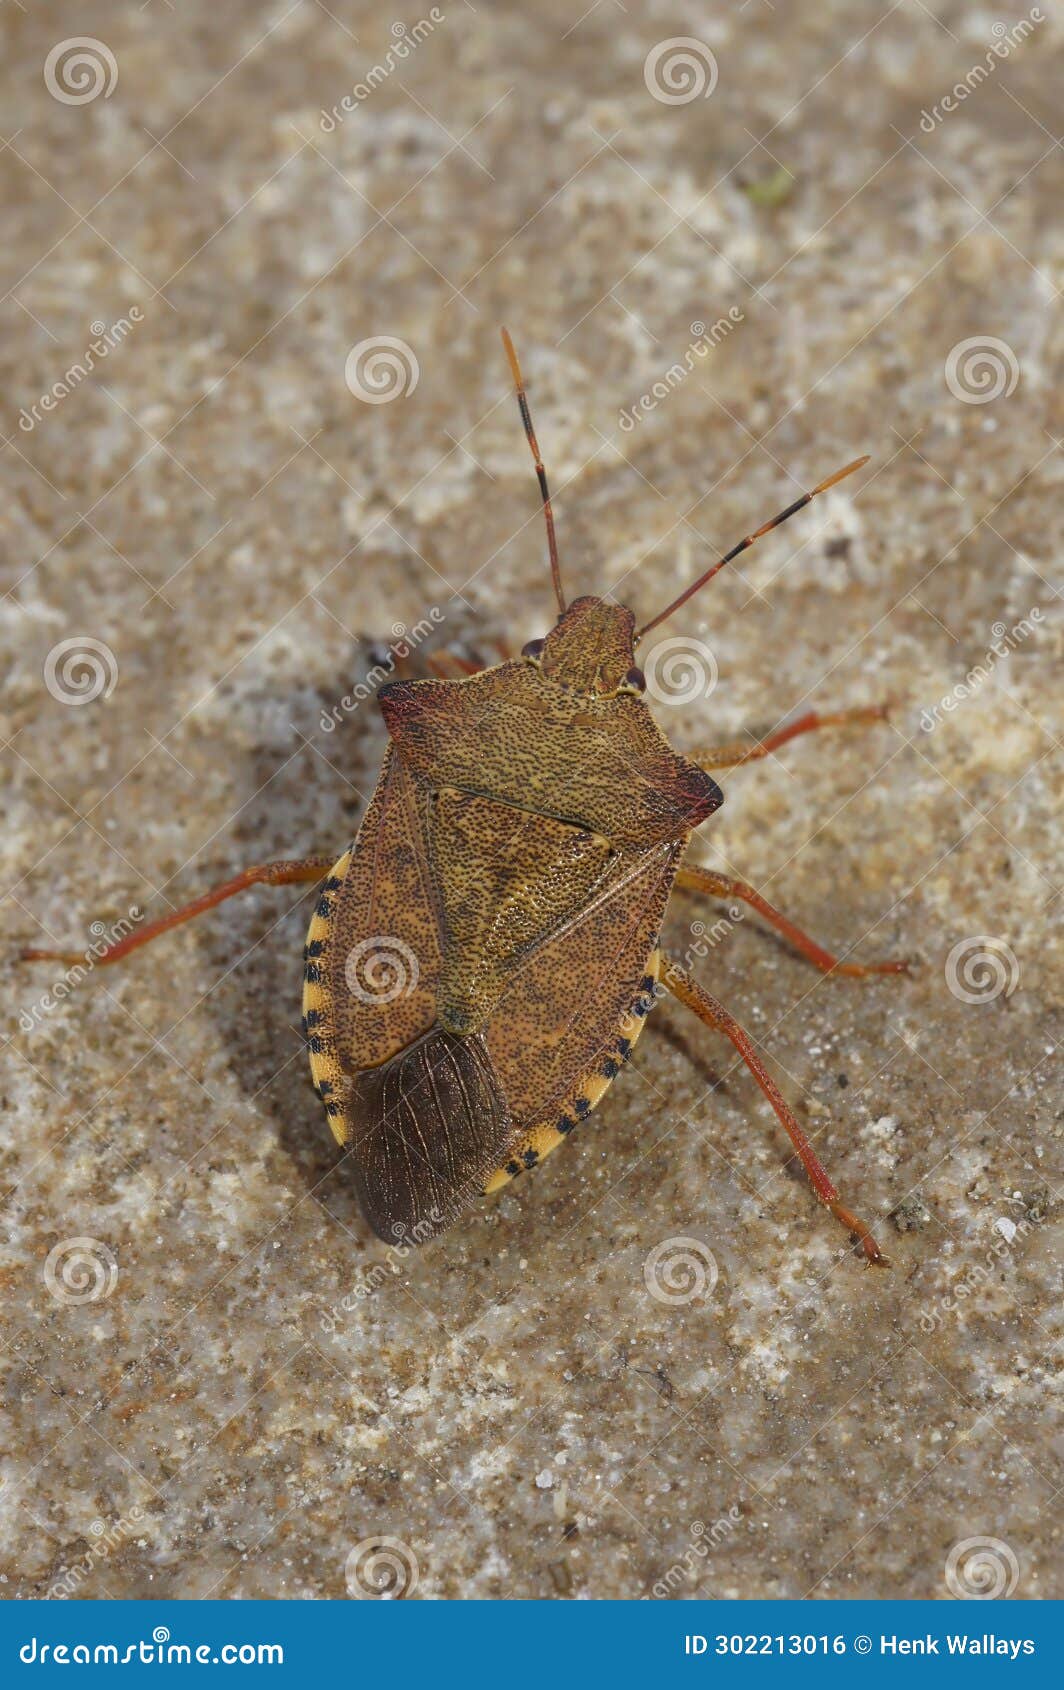 vertical closeup on a the brown dock leaf bug, arma custos, sitting on a stone